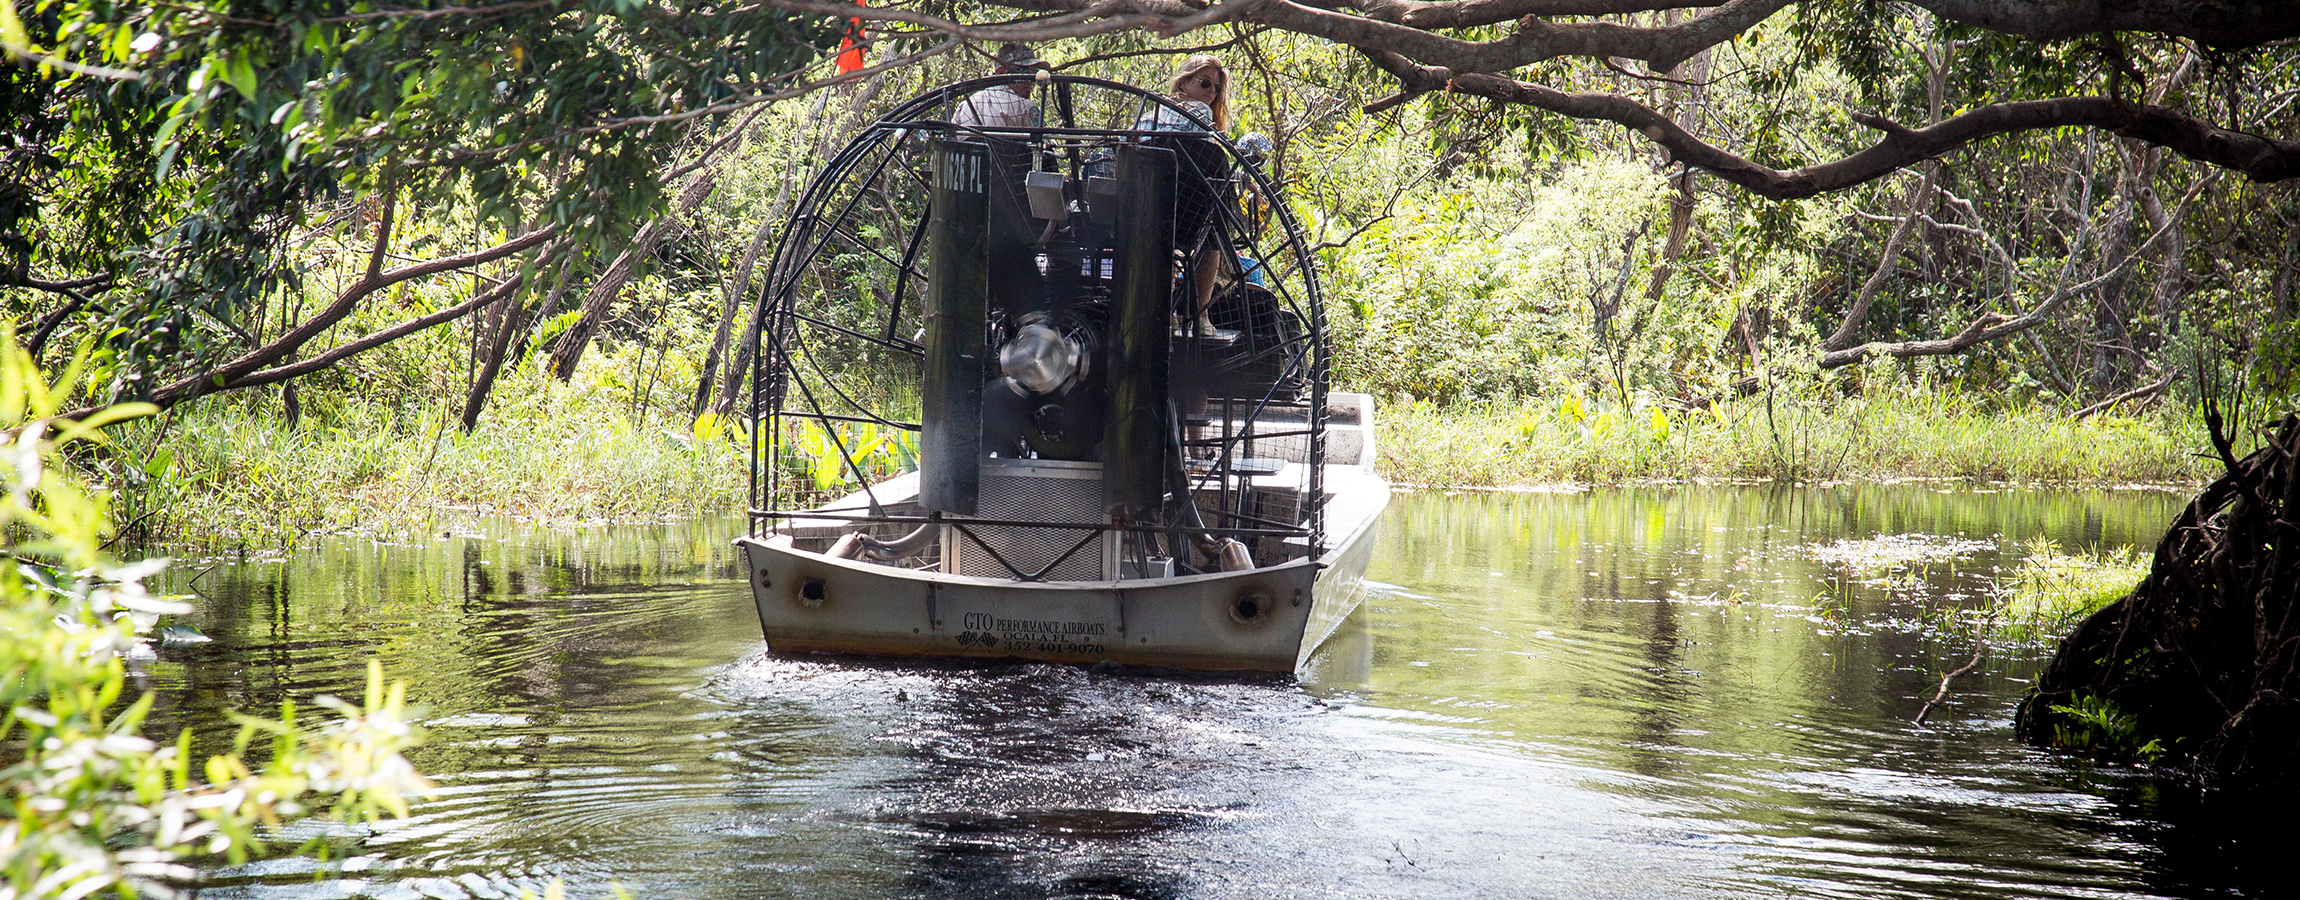 Florida Airboat Rides at Gator Park - Everglades Airboat Tours, Everglades National Park Florida ...